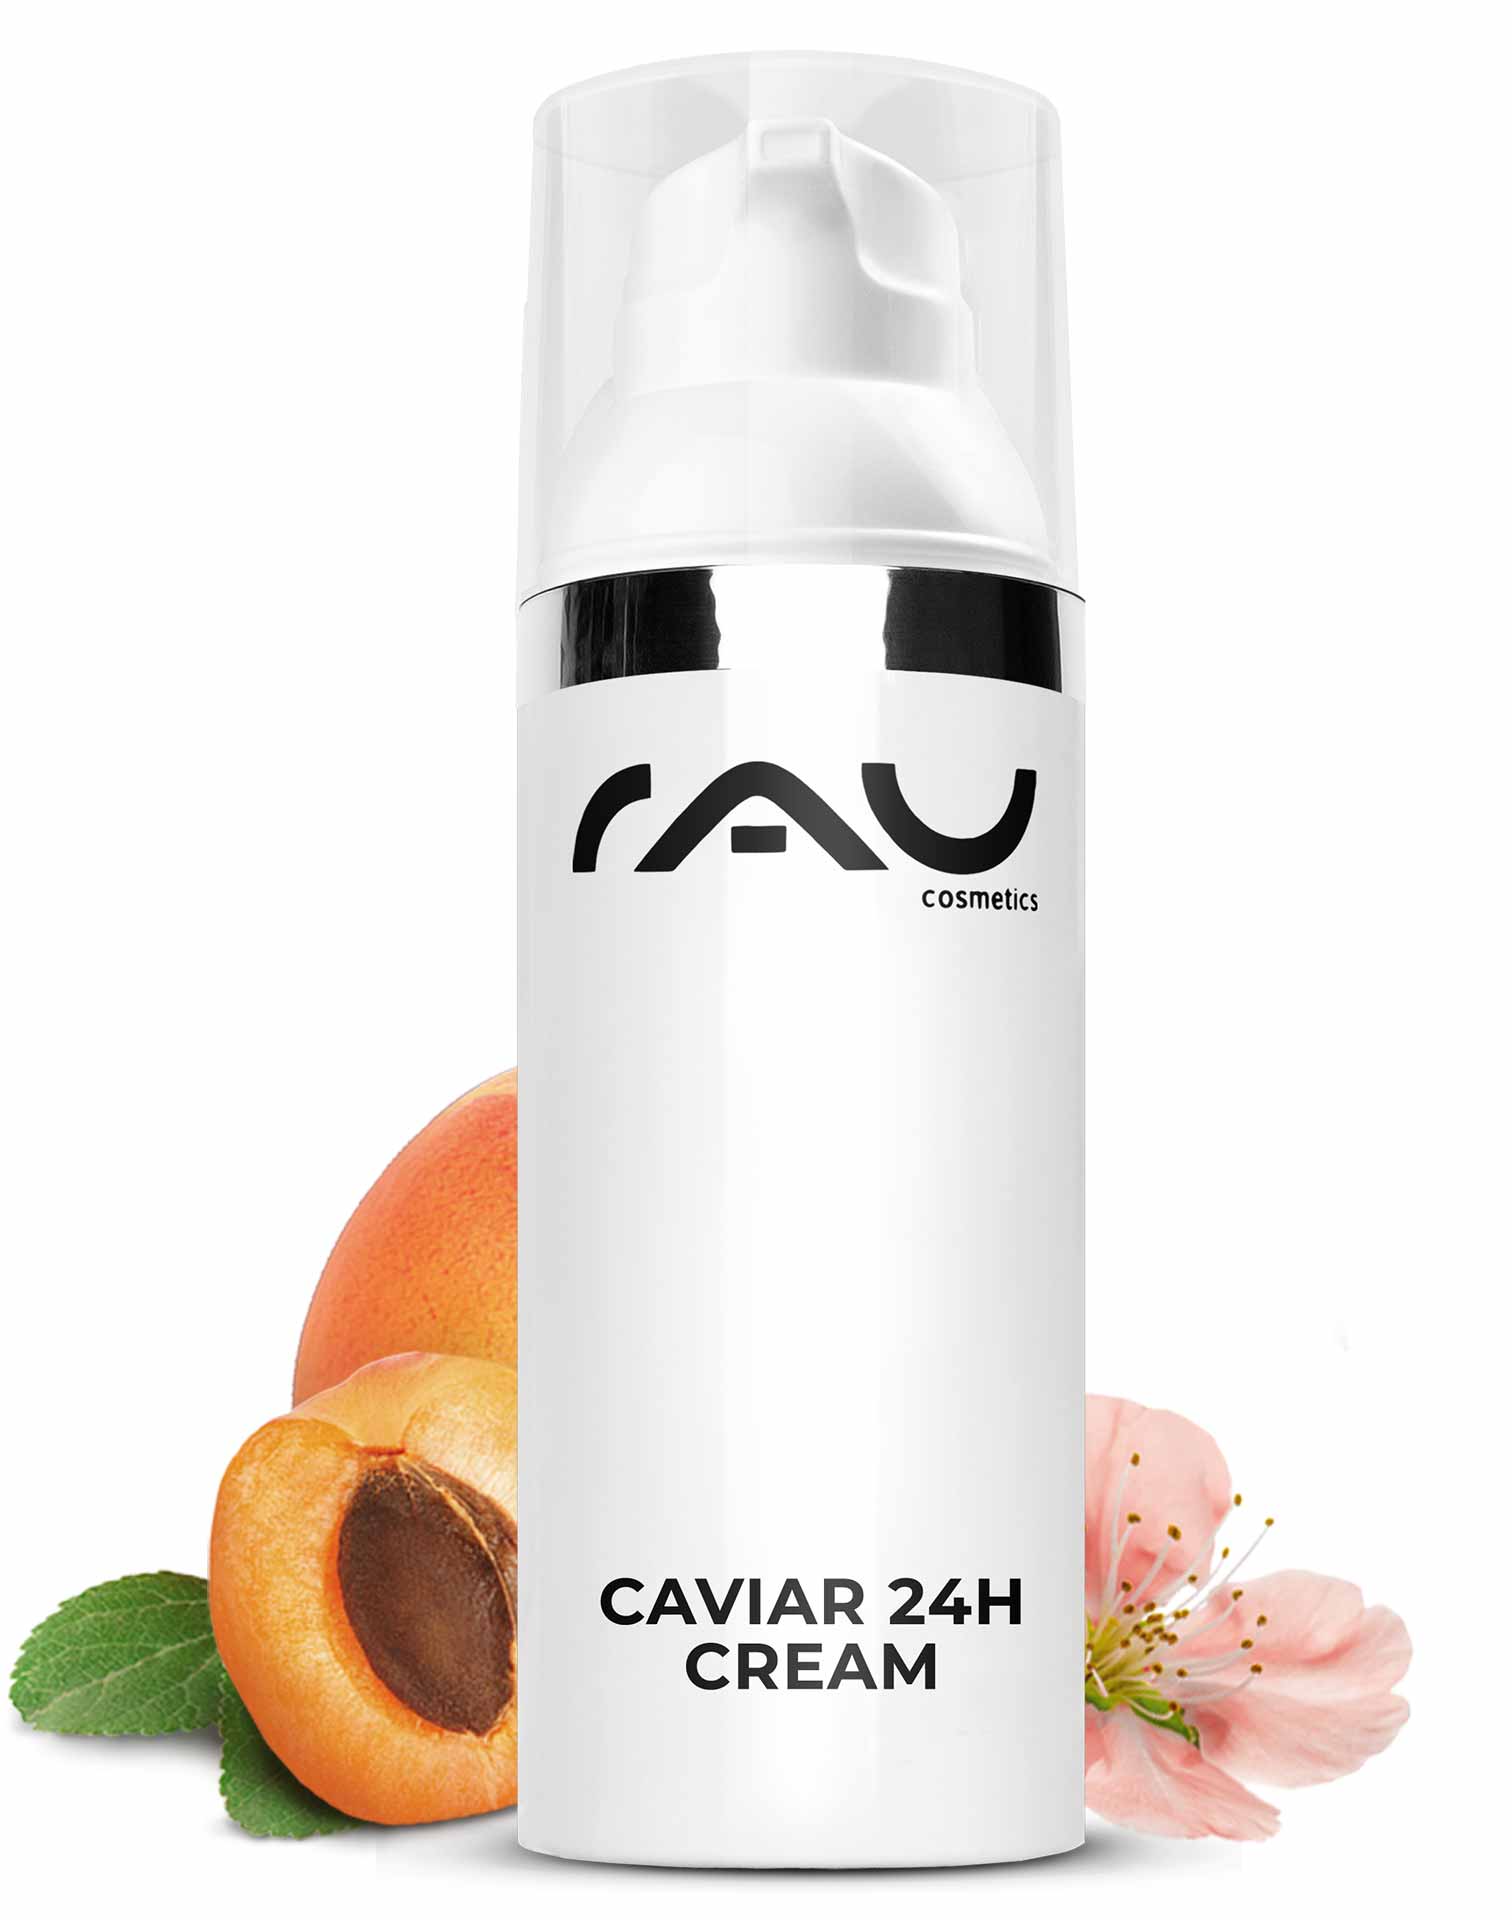 Caviar 24h Cream 50 ml Skin Care with Caviar Extract